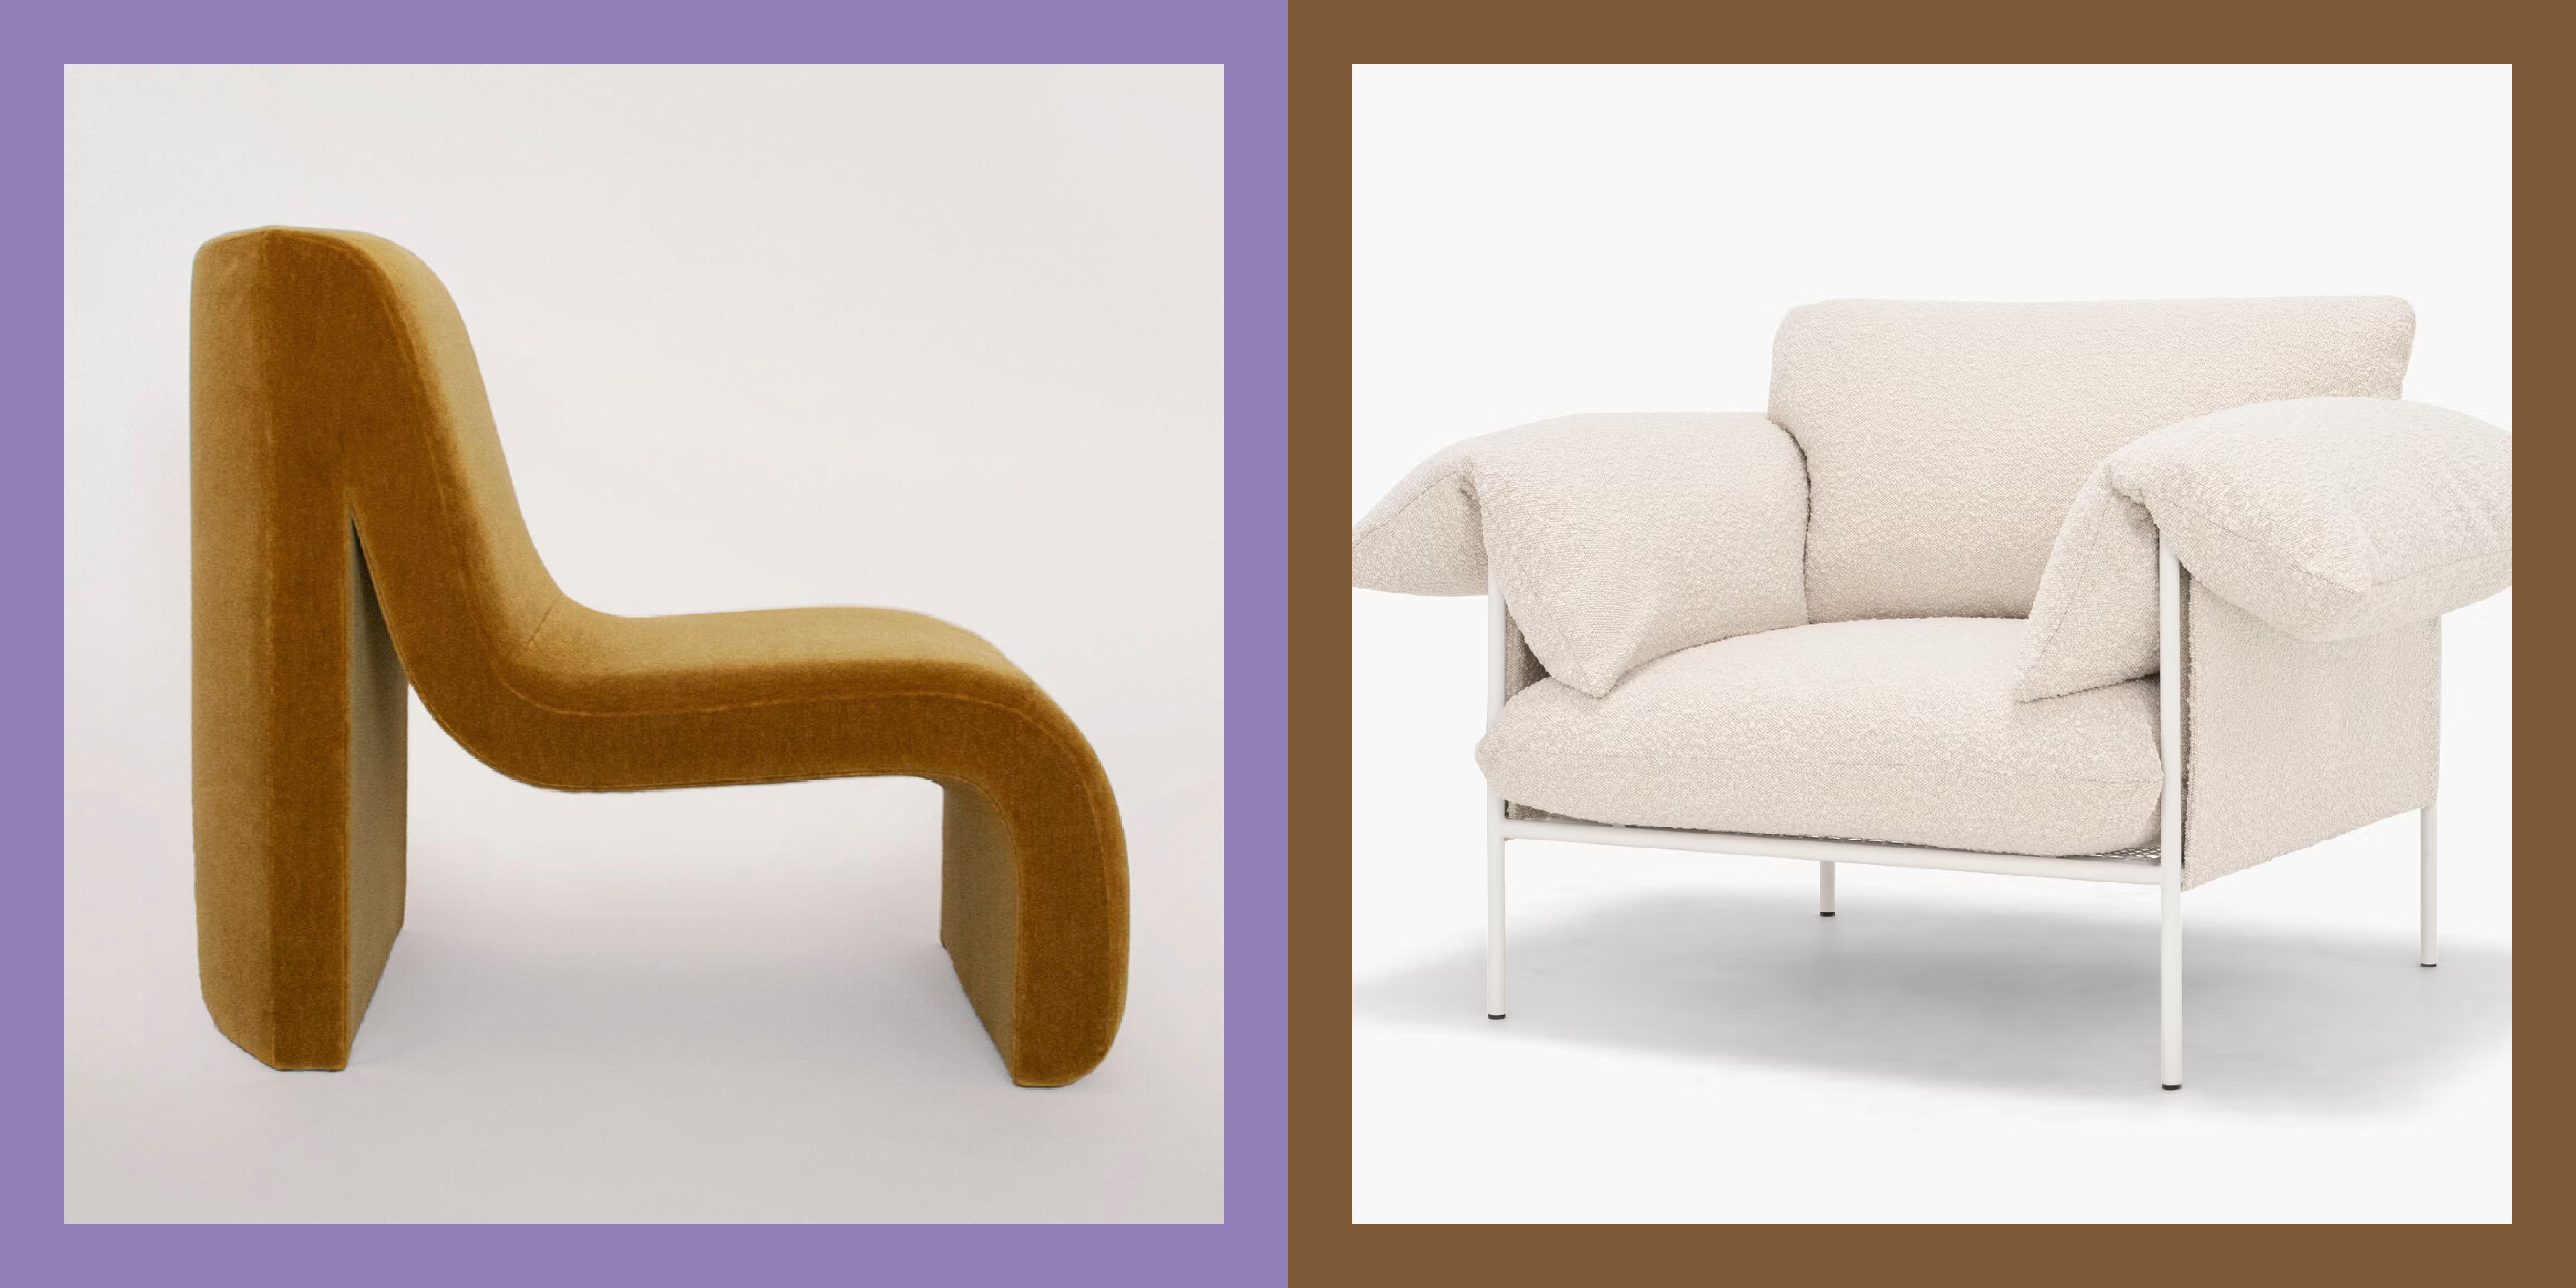 50+ Chair Ideas - Stylish Designer Chairs